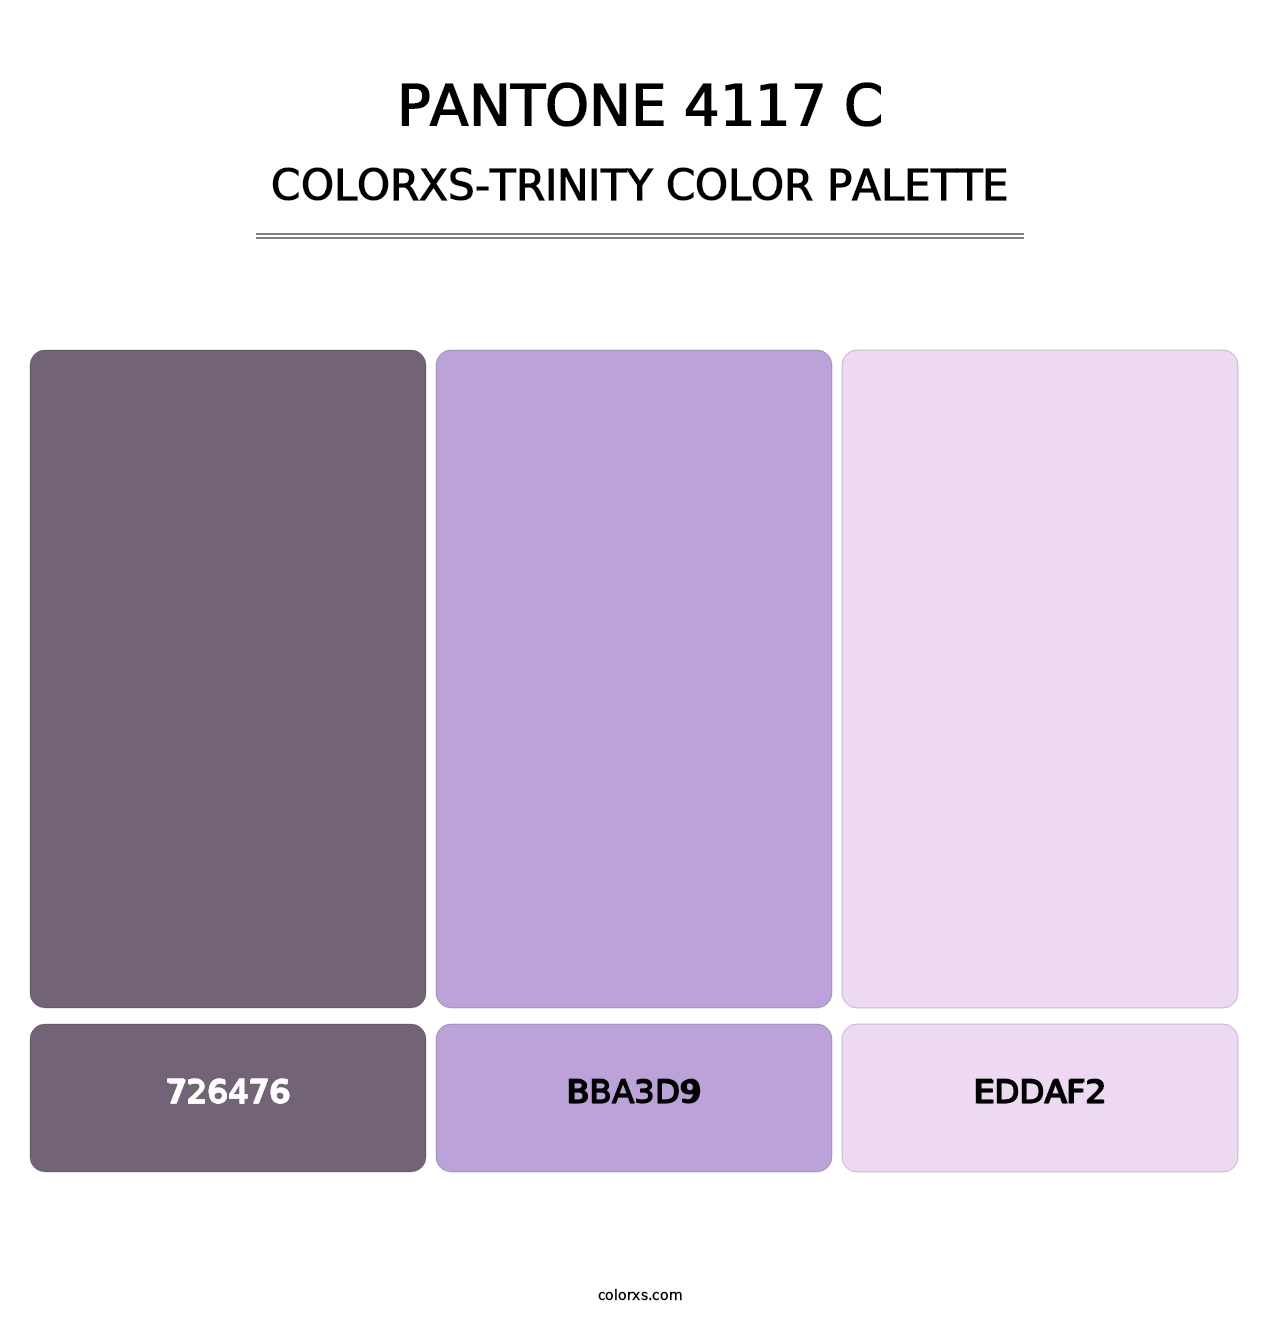 PANTONE 4117 C - Colorxs Trinity Palette